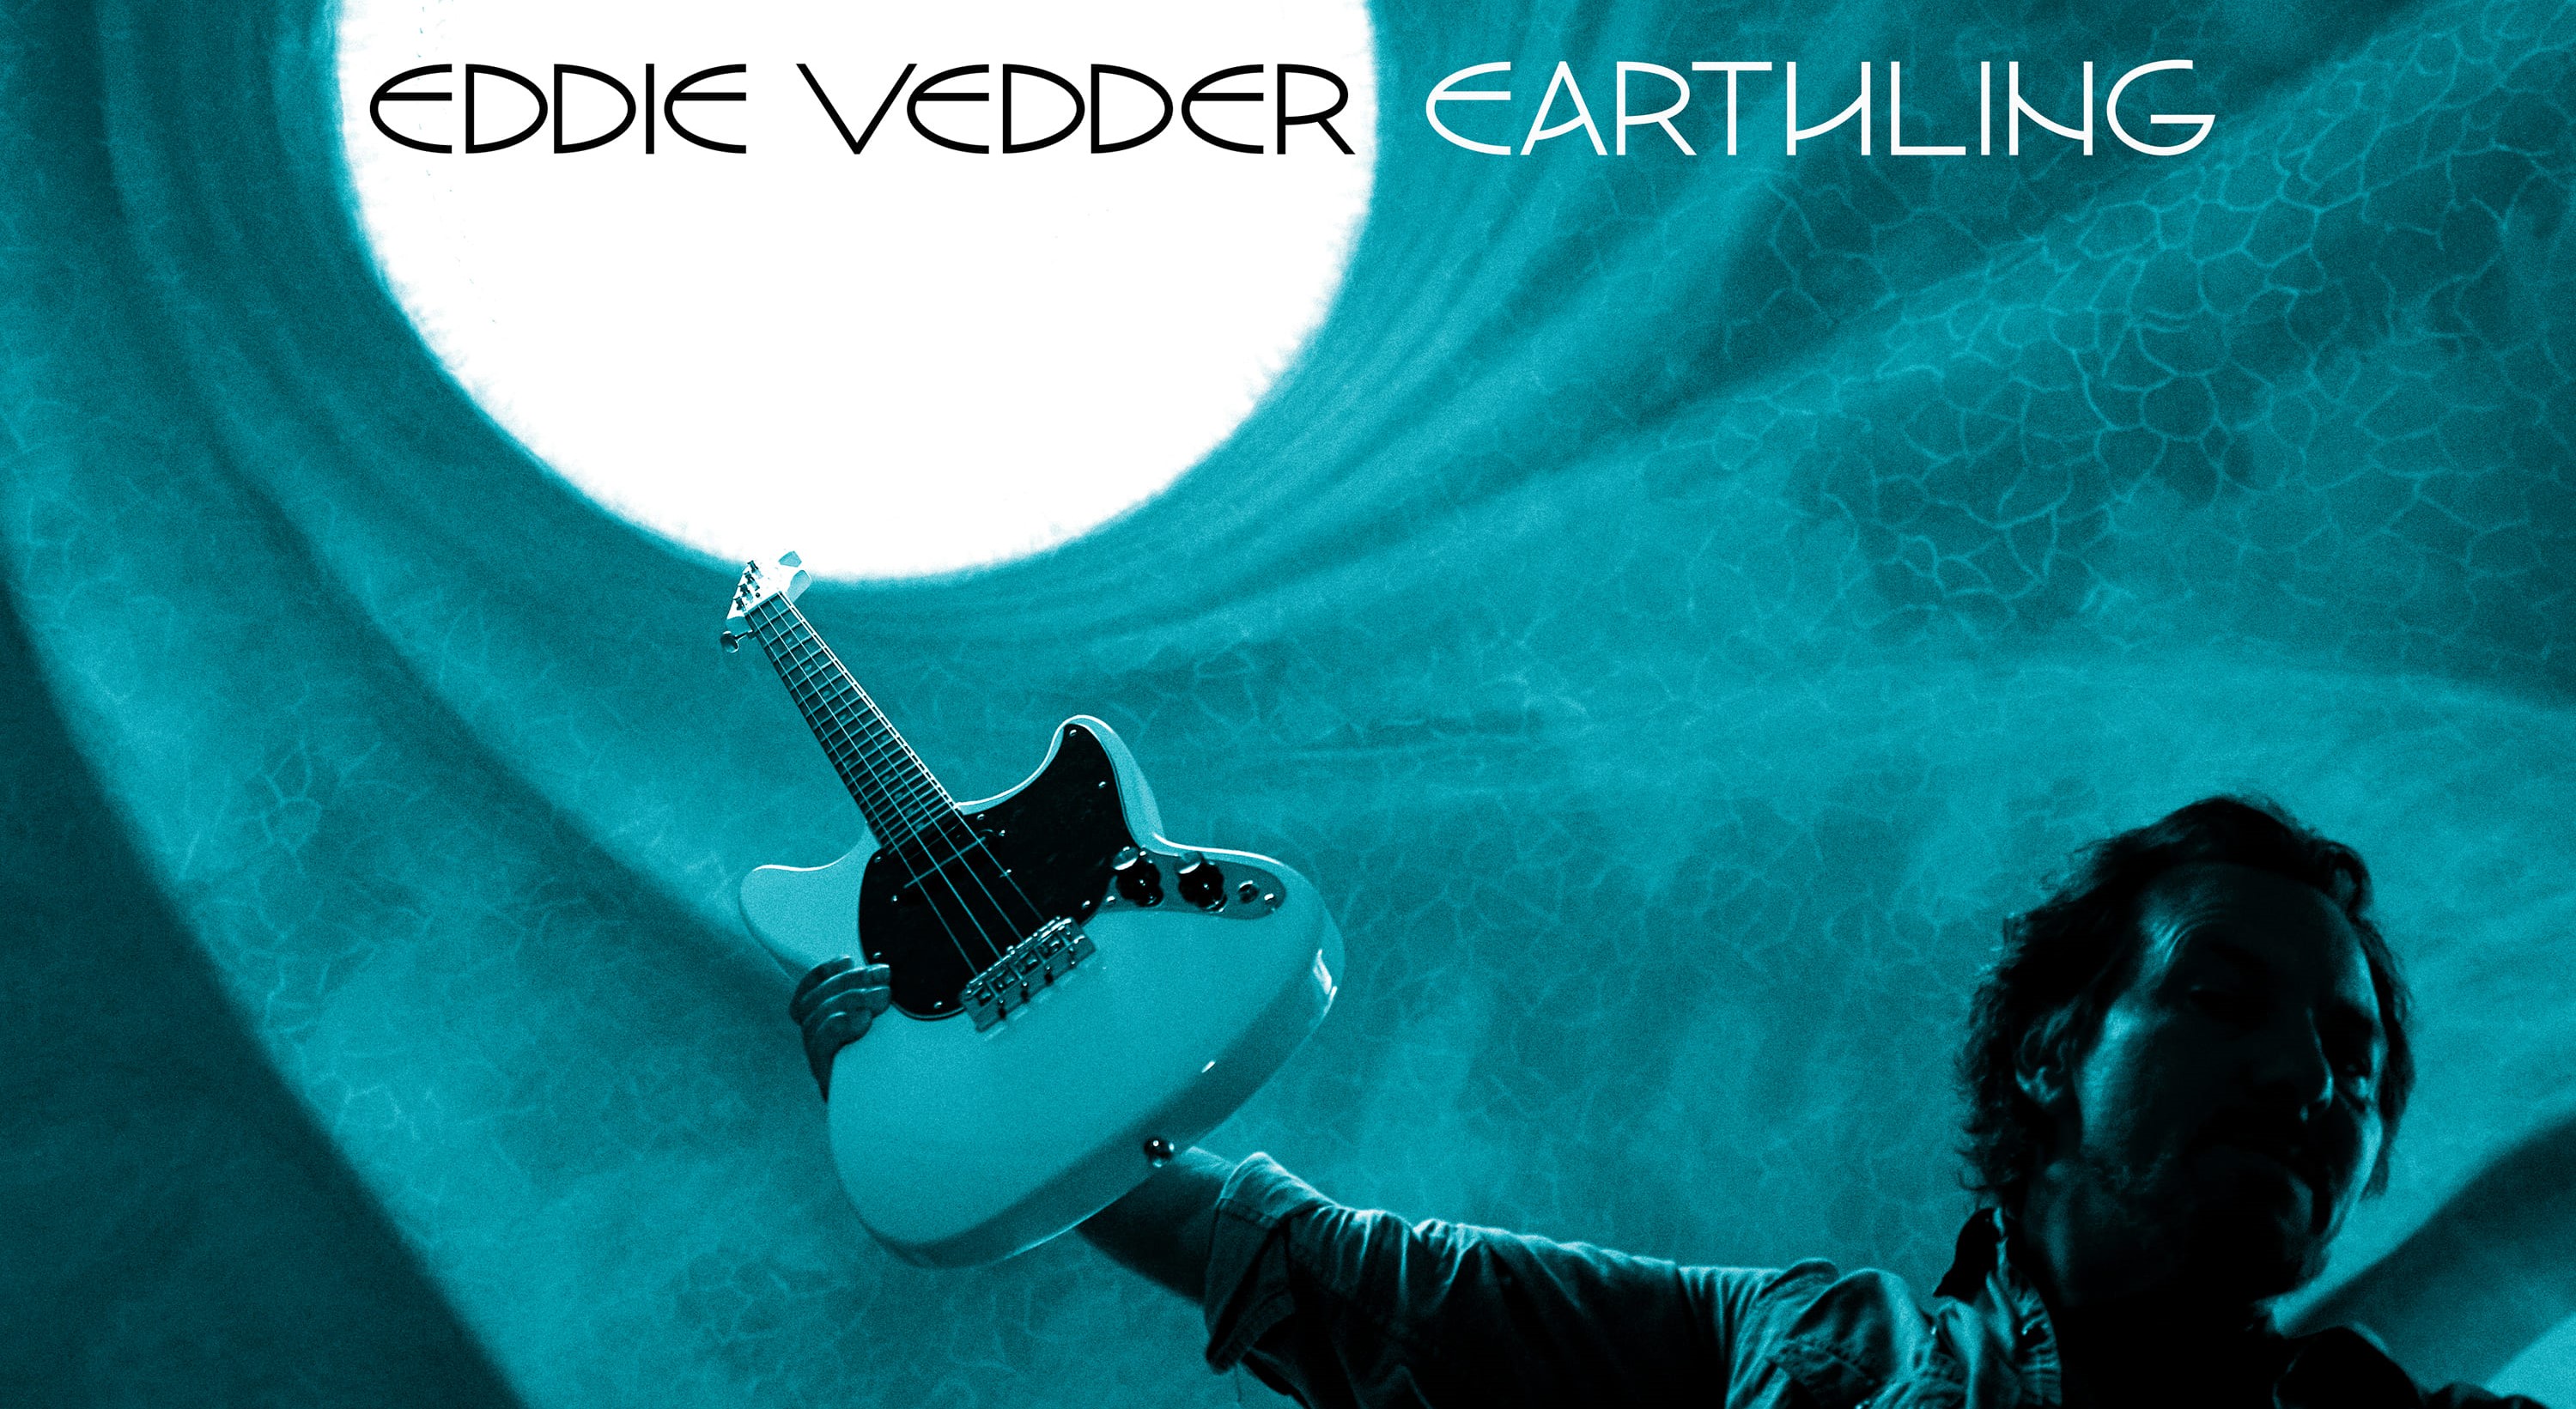 Nuovo album Earthling, Eddie Vedder intervista con Bruce Springsteen nello speciale